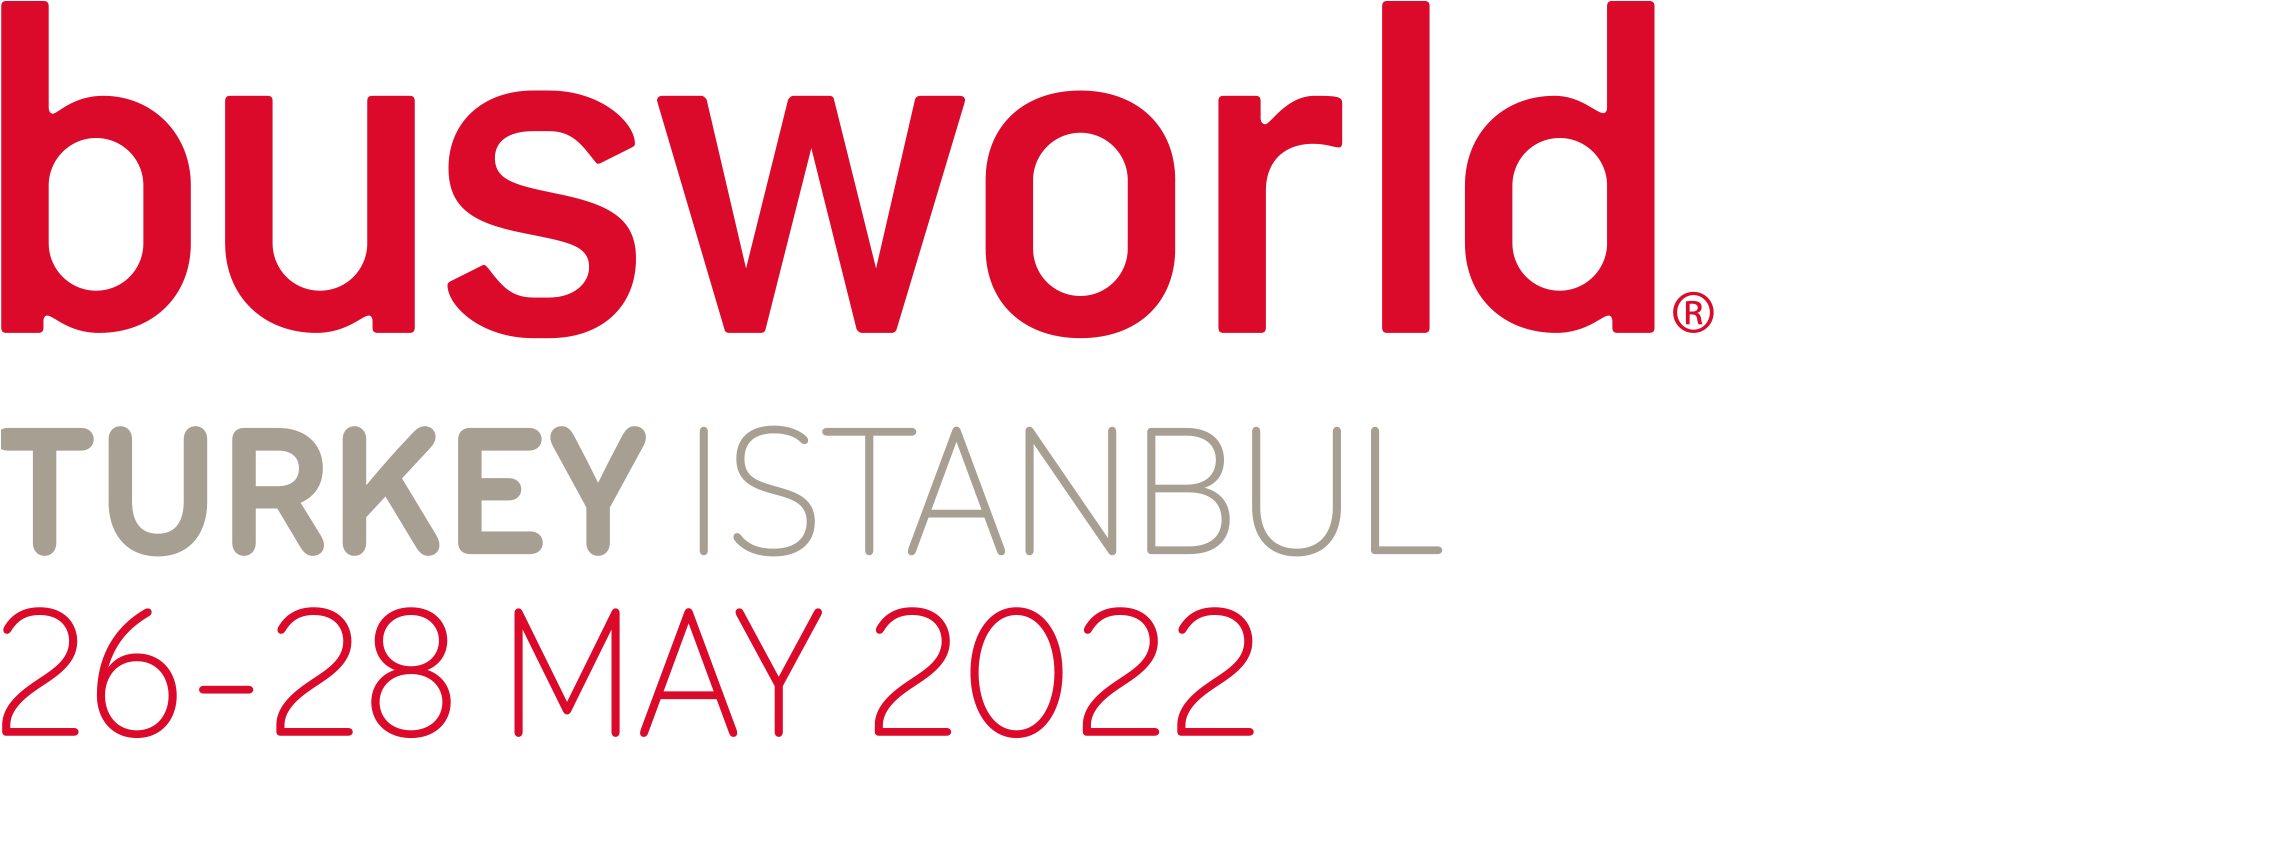 Busworld Europe 2021 logo